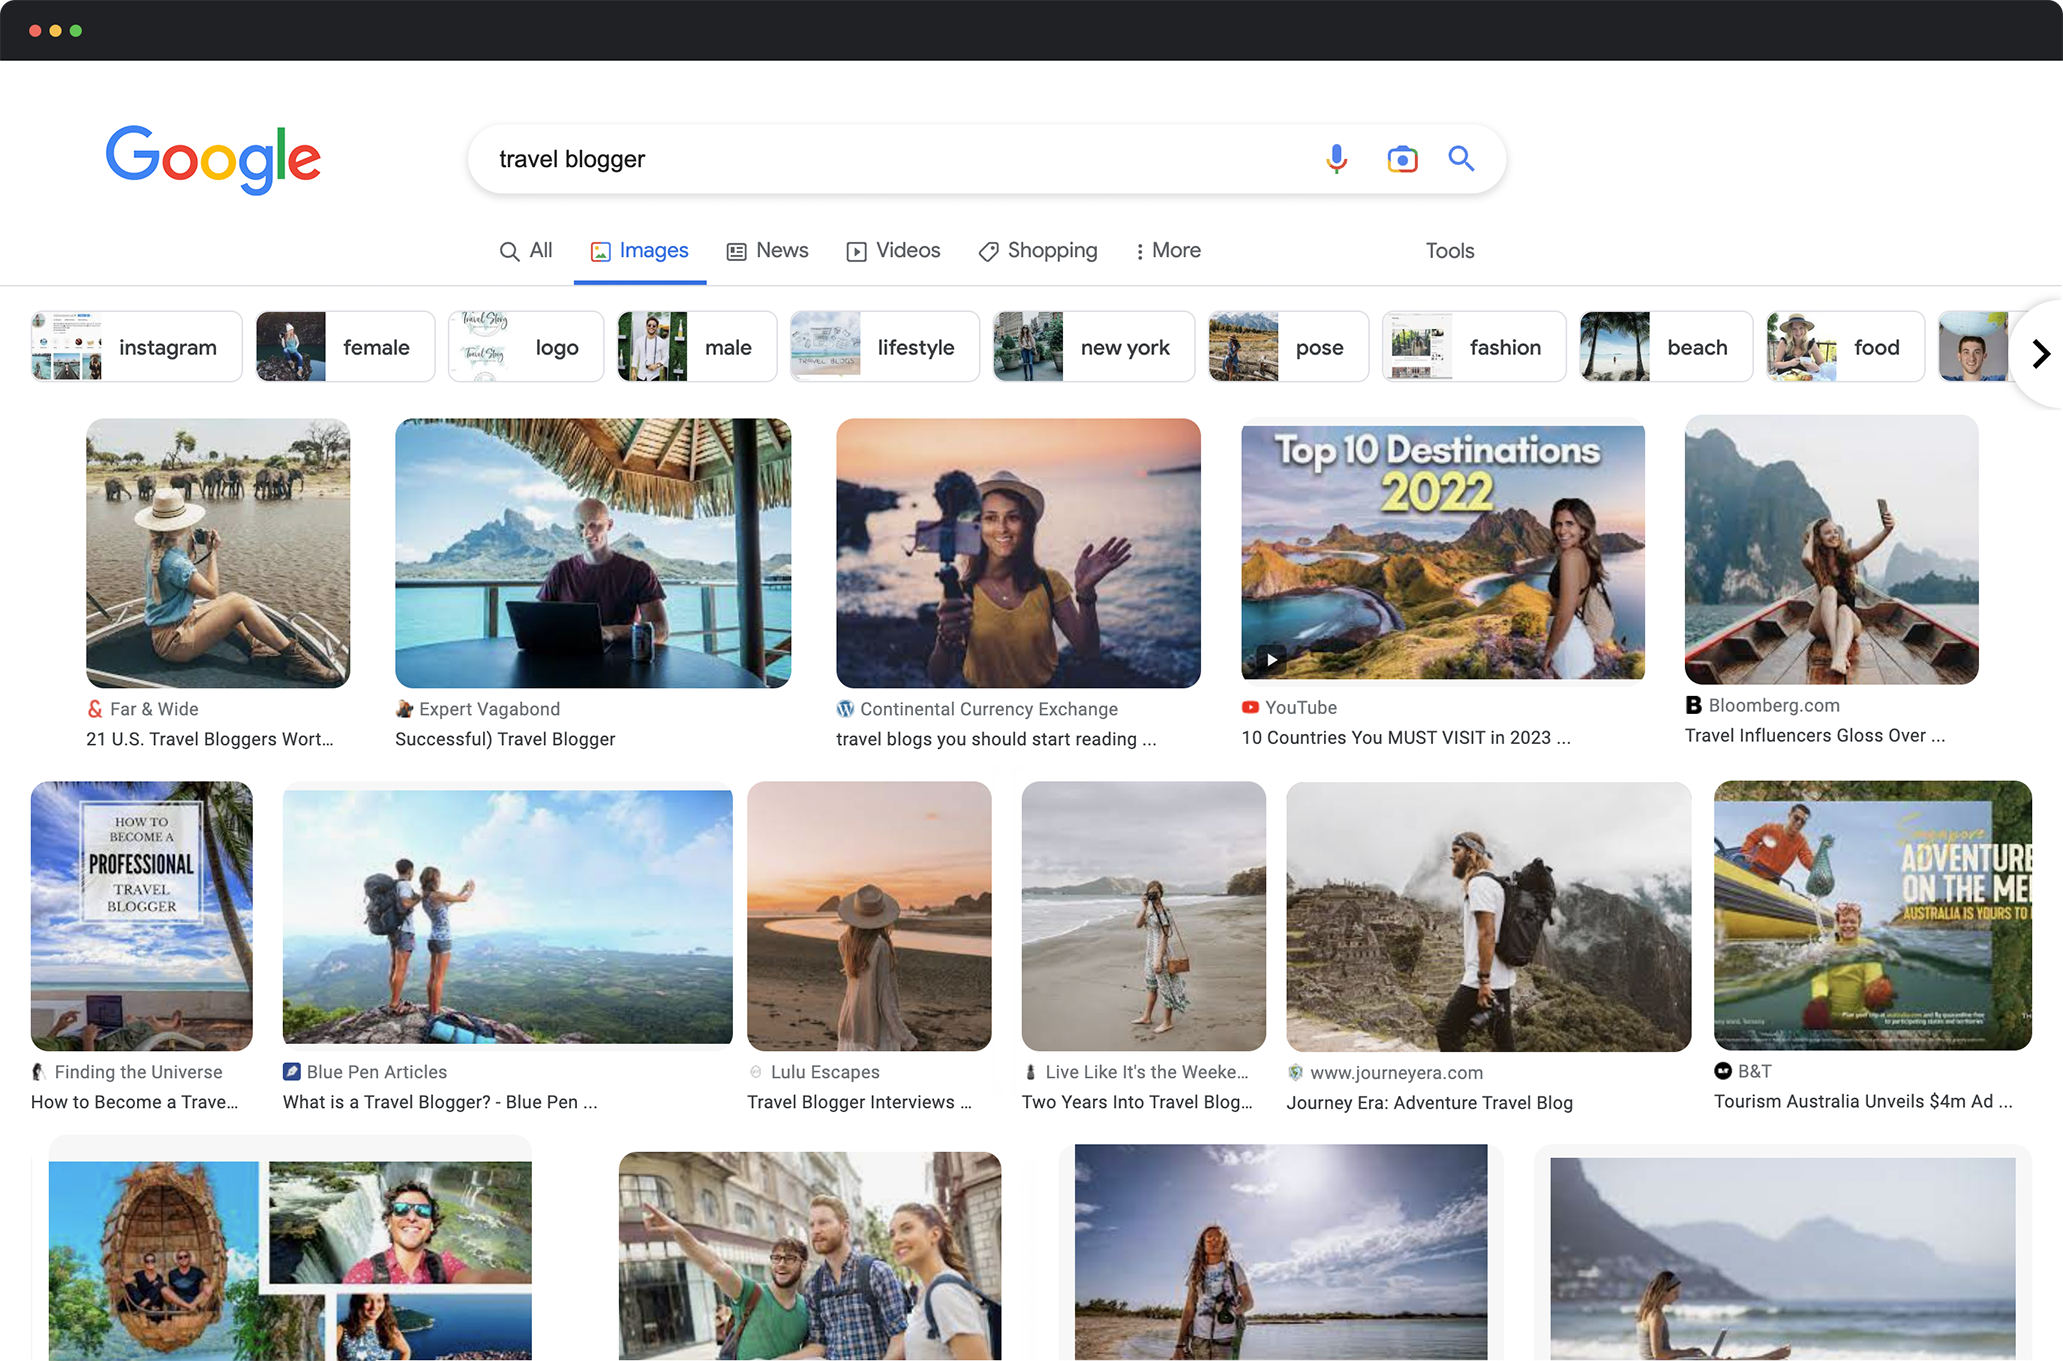 Google-TravelBlogger-Tourism